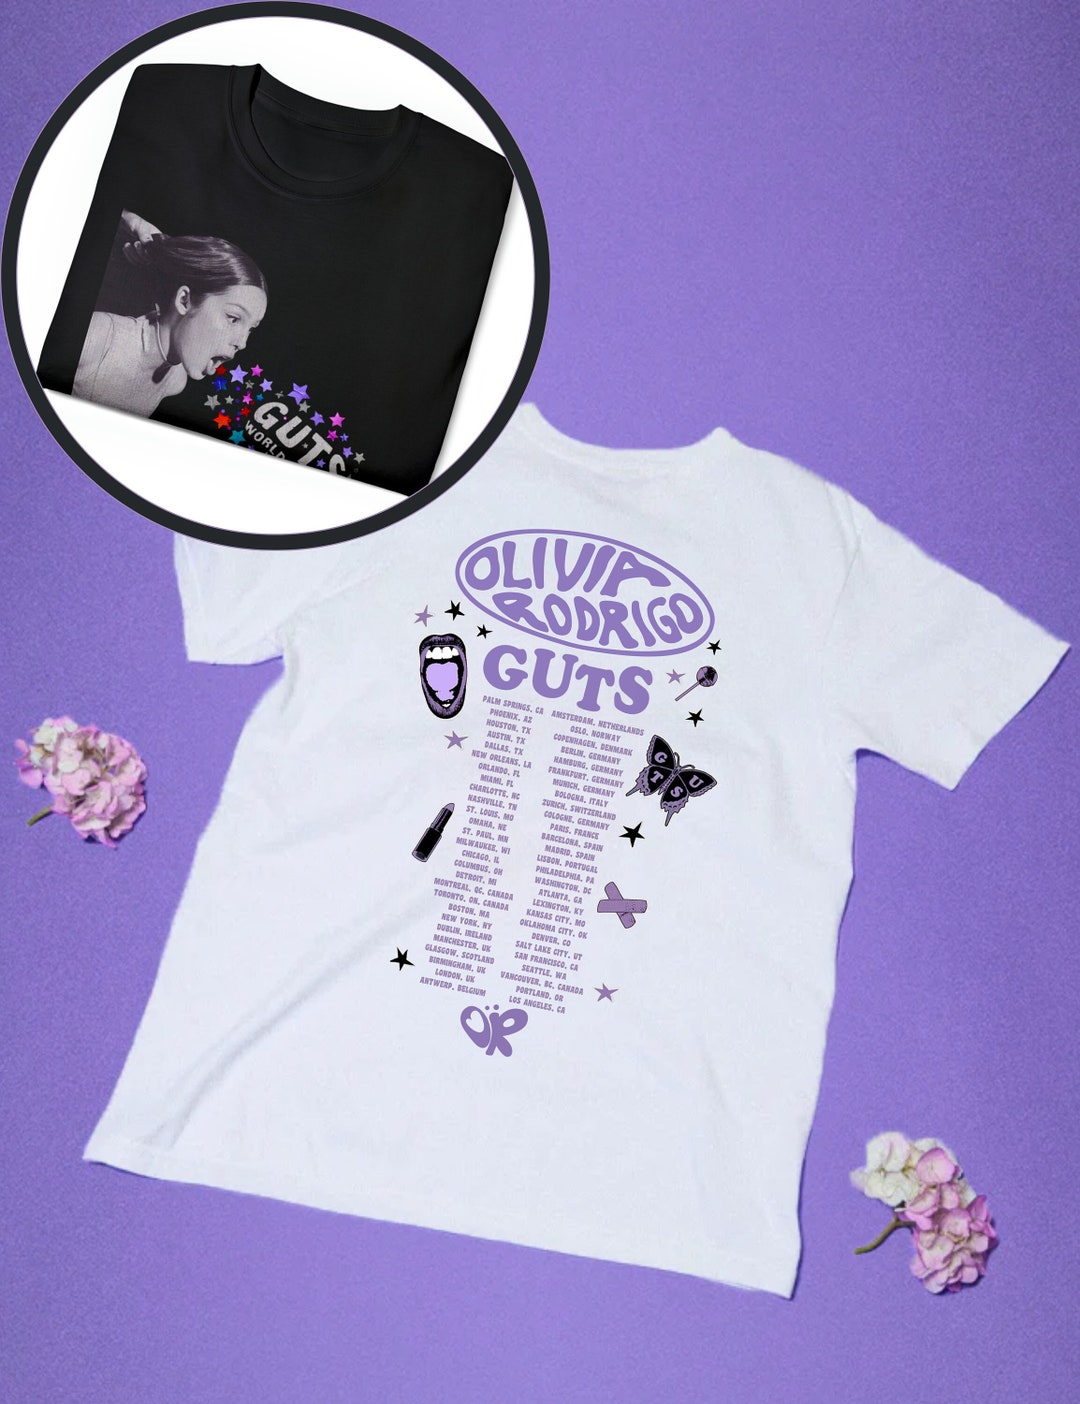 GUTS Tour Shirt Olivia Rodrigo Merch Album Tracklist Tee Etsy